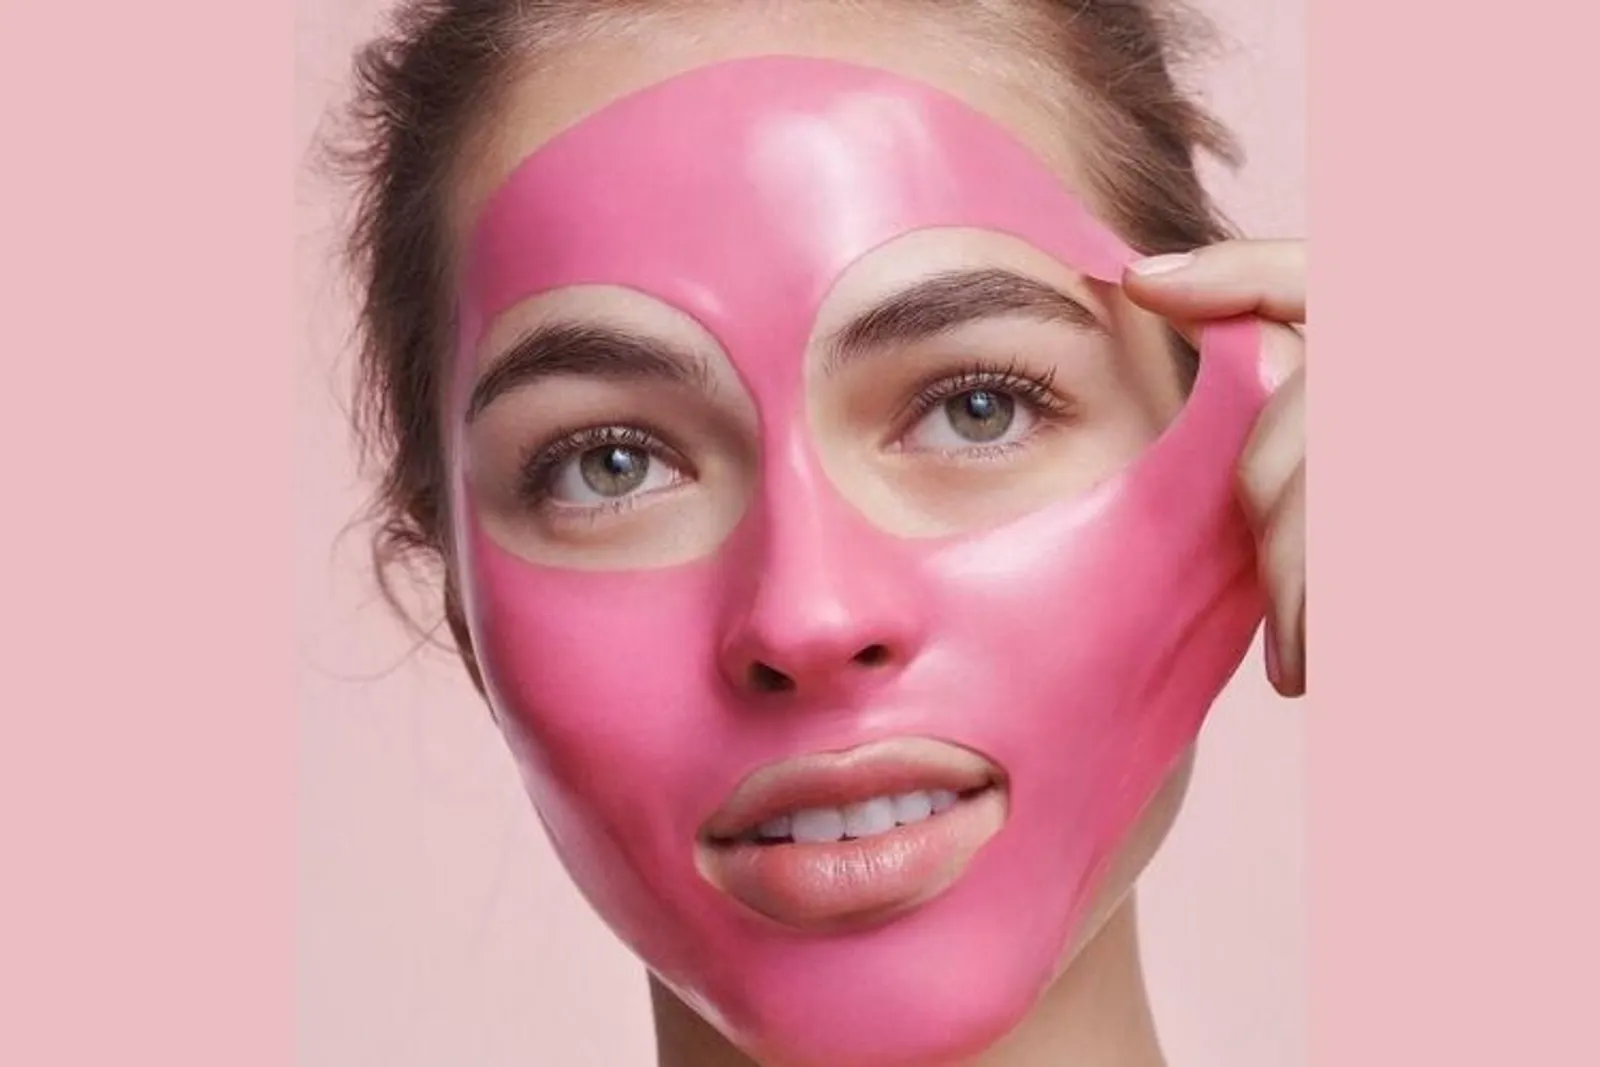 Peel-off Mask Pilihan untuk Kulit Wajah Makin Bersih dan Bersinar